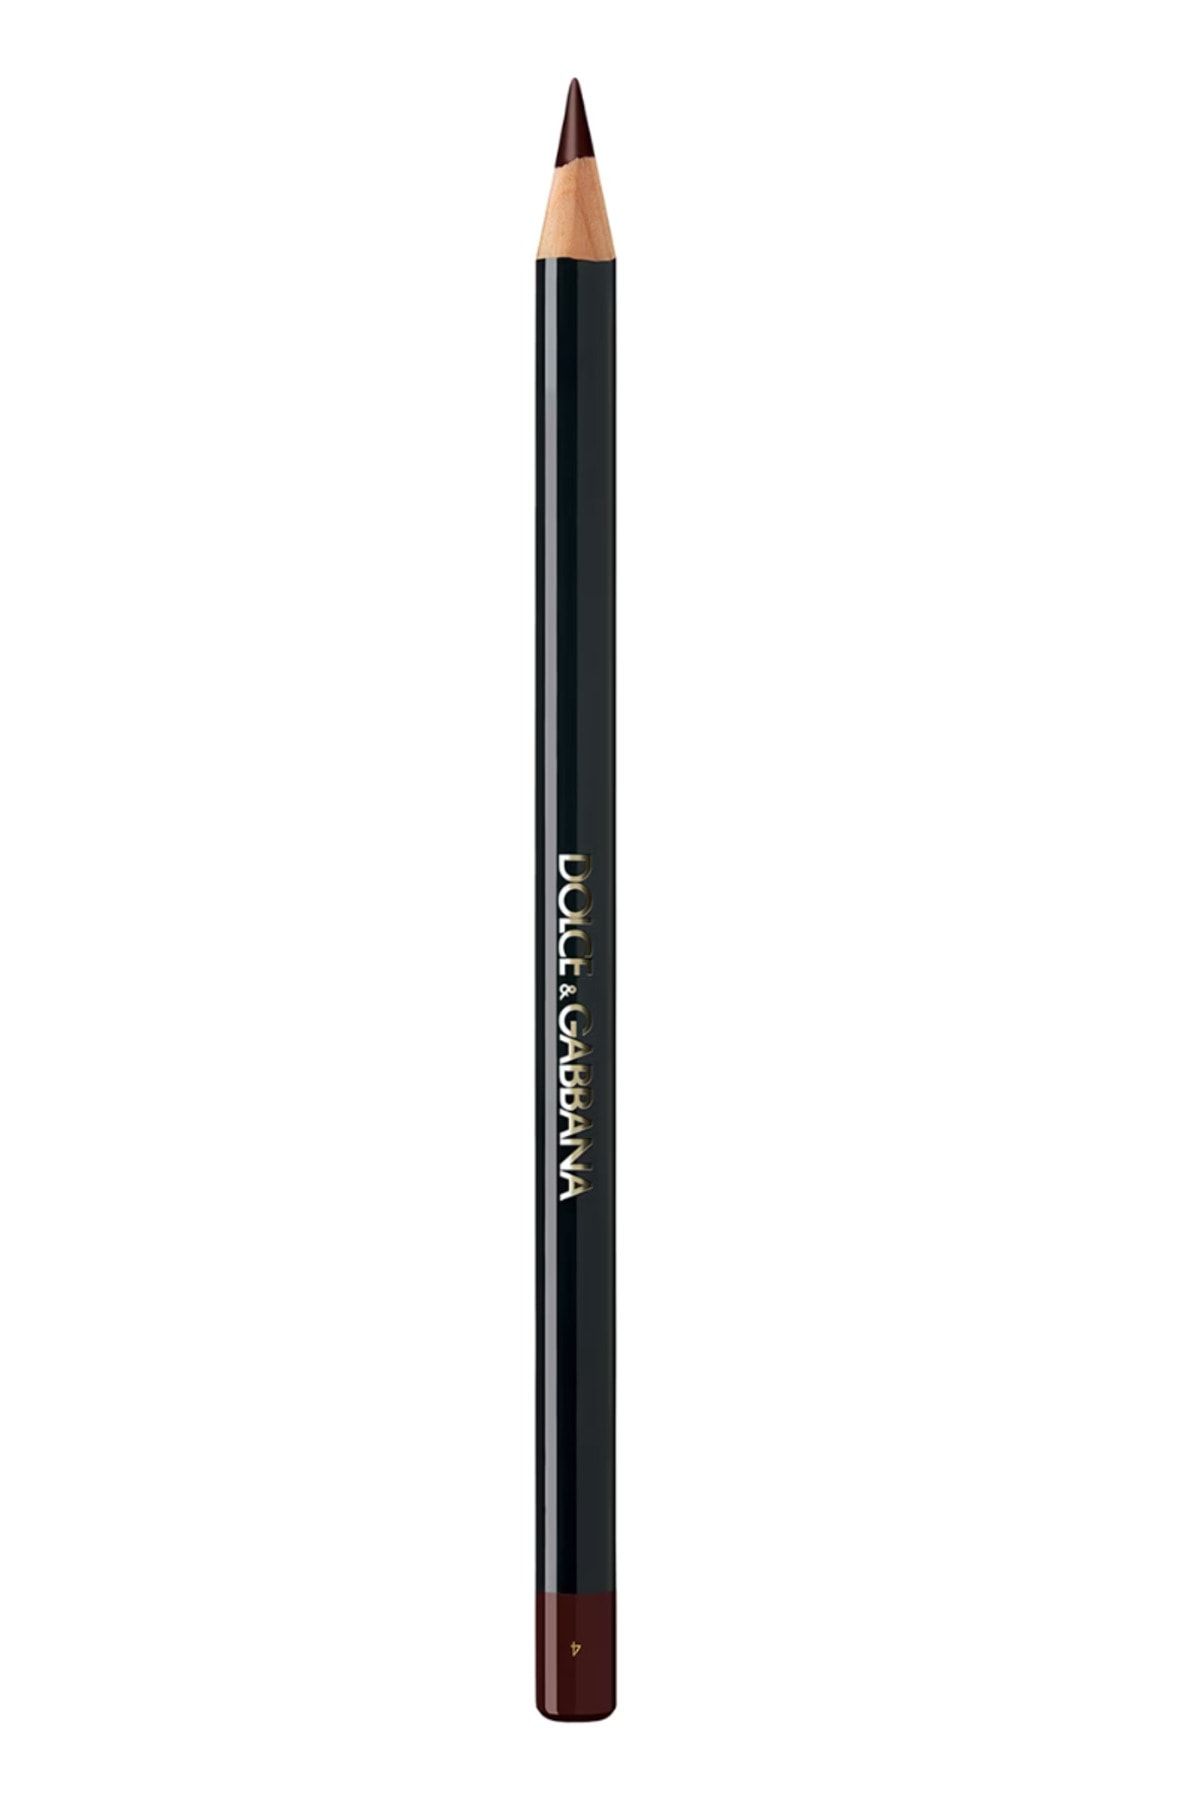 Dolce&Gabbana The Khol Pencil